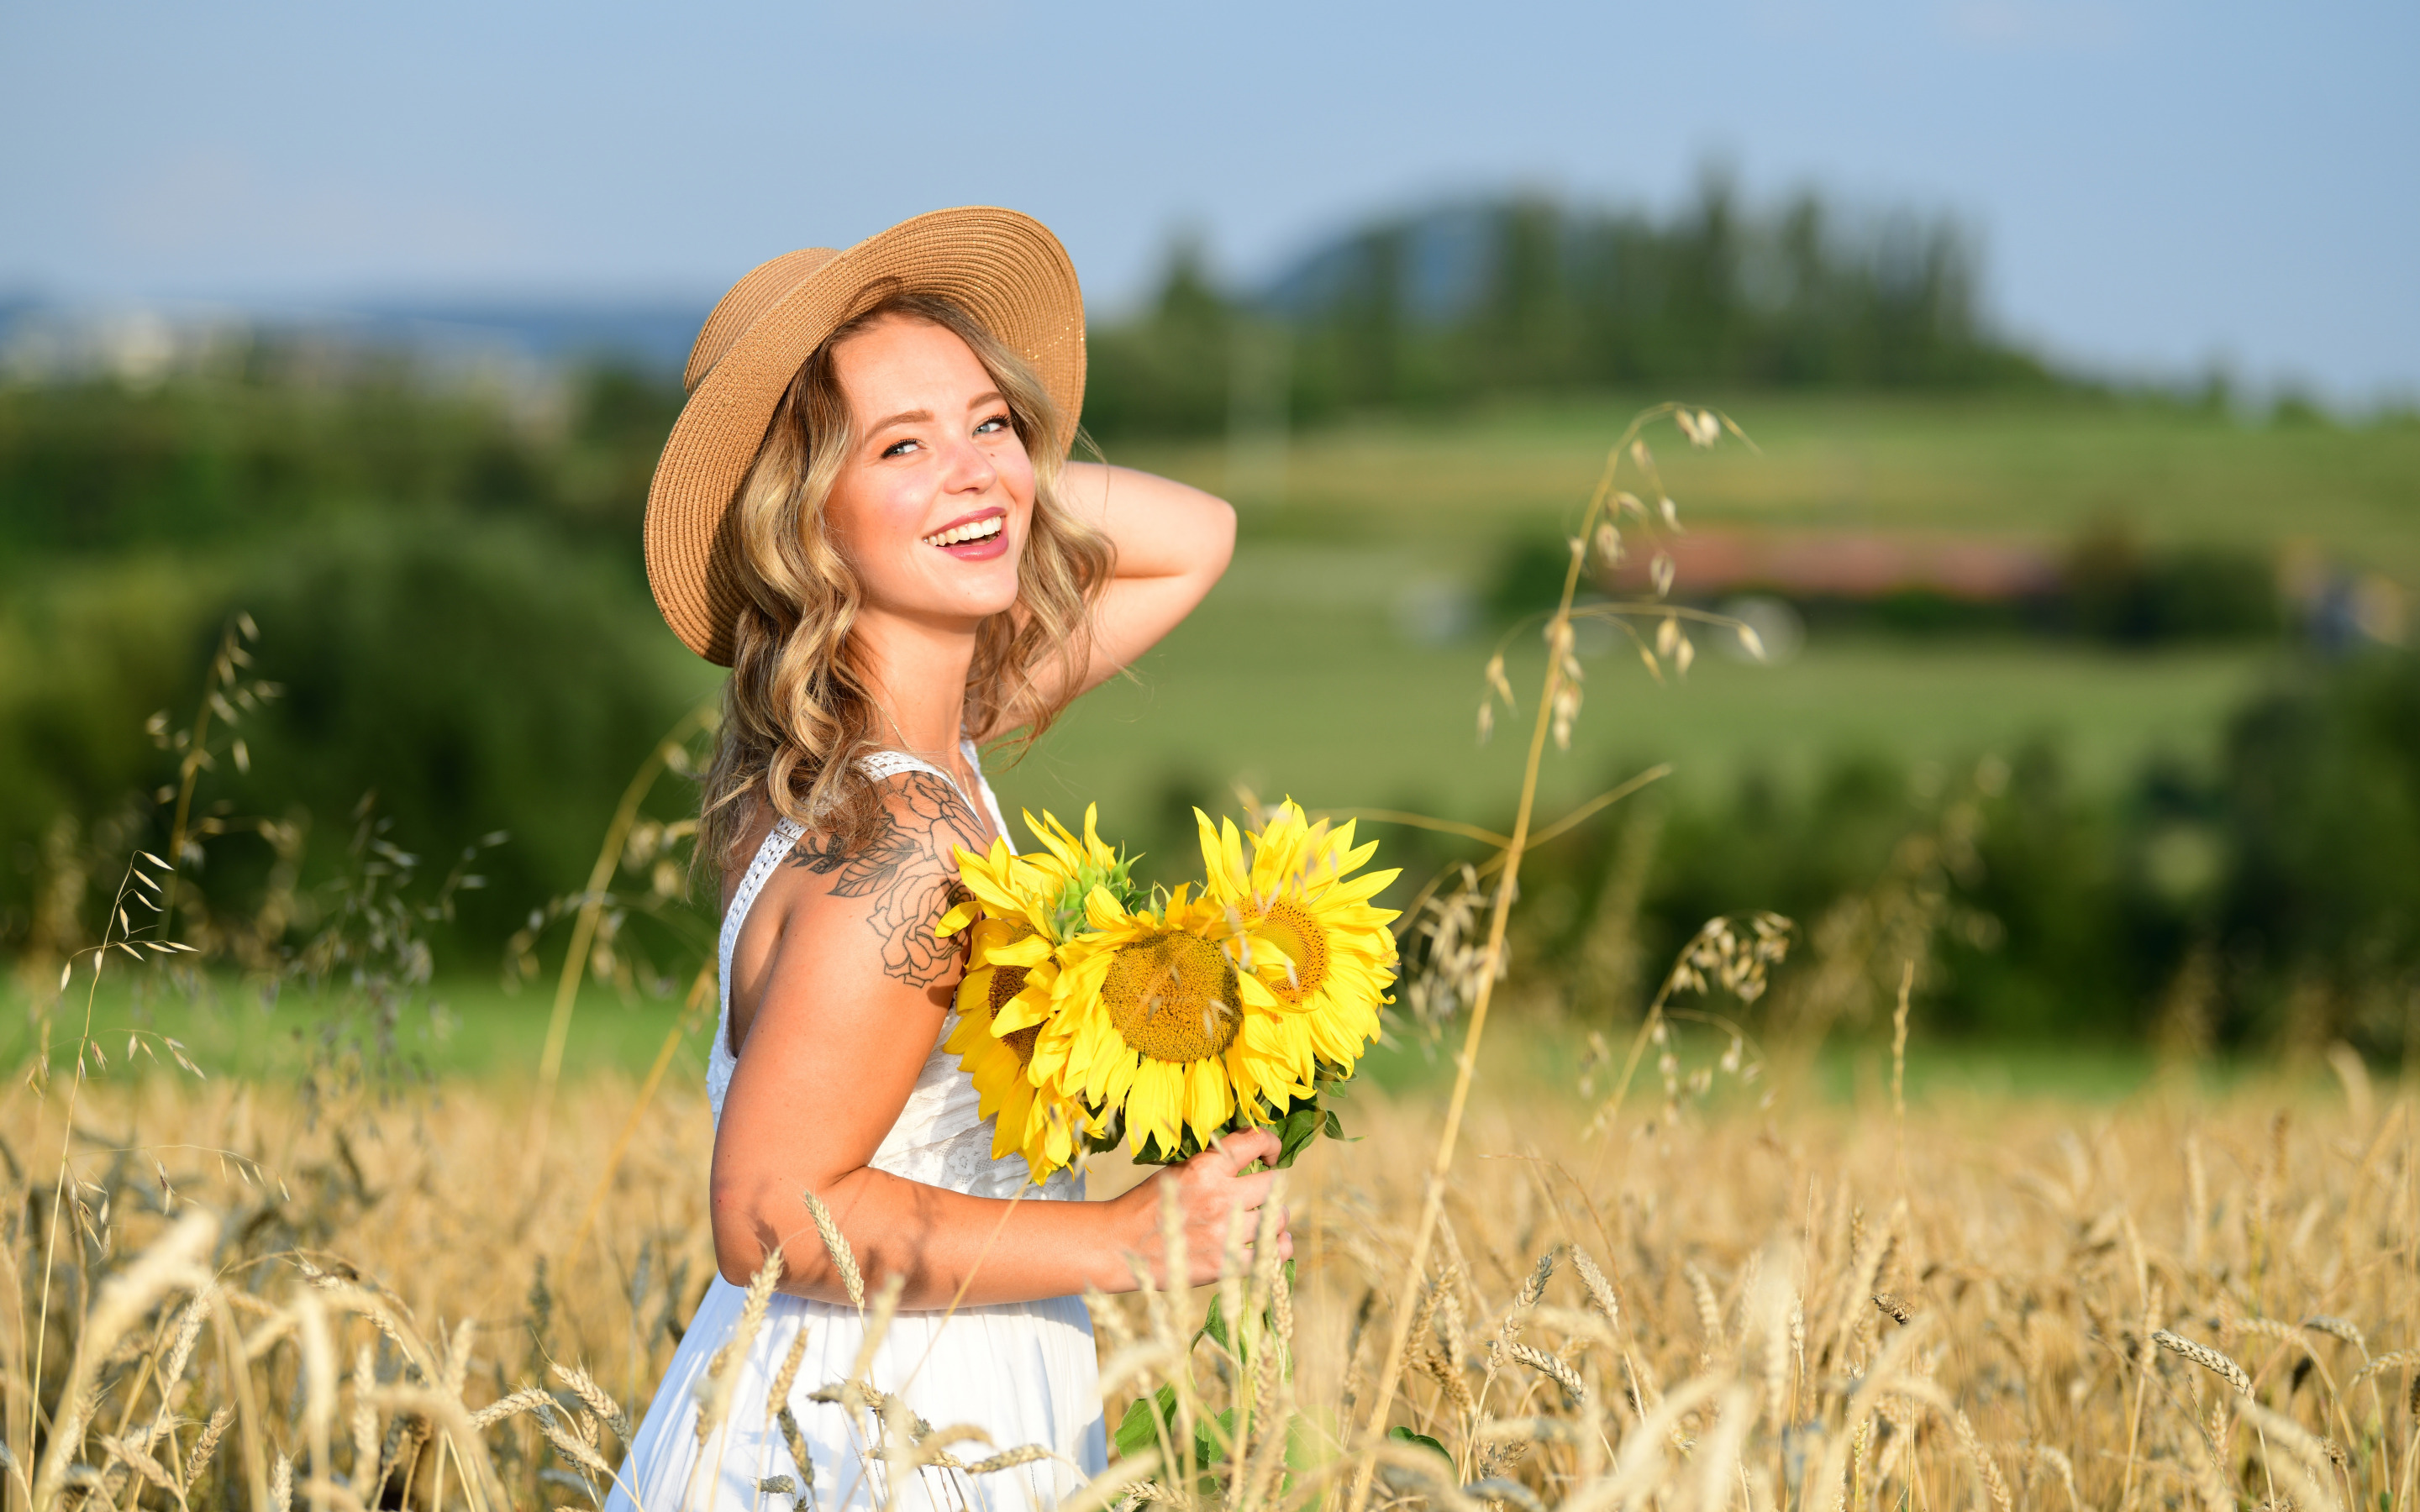 Model Women Red Lipstick Smiling Hands In Hair Hat Sunflower Field White Dress Women Outdoors 2880x1800